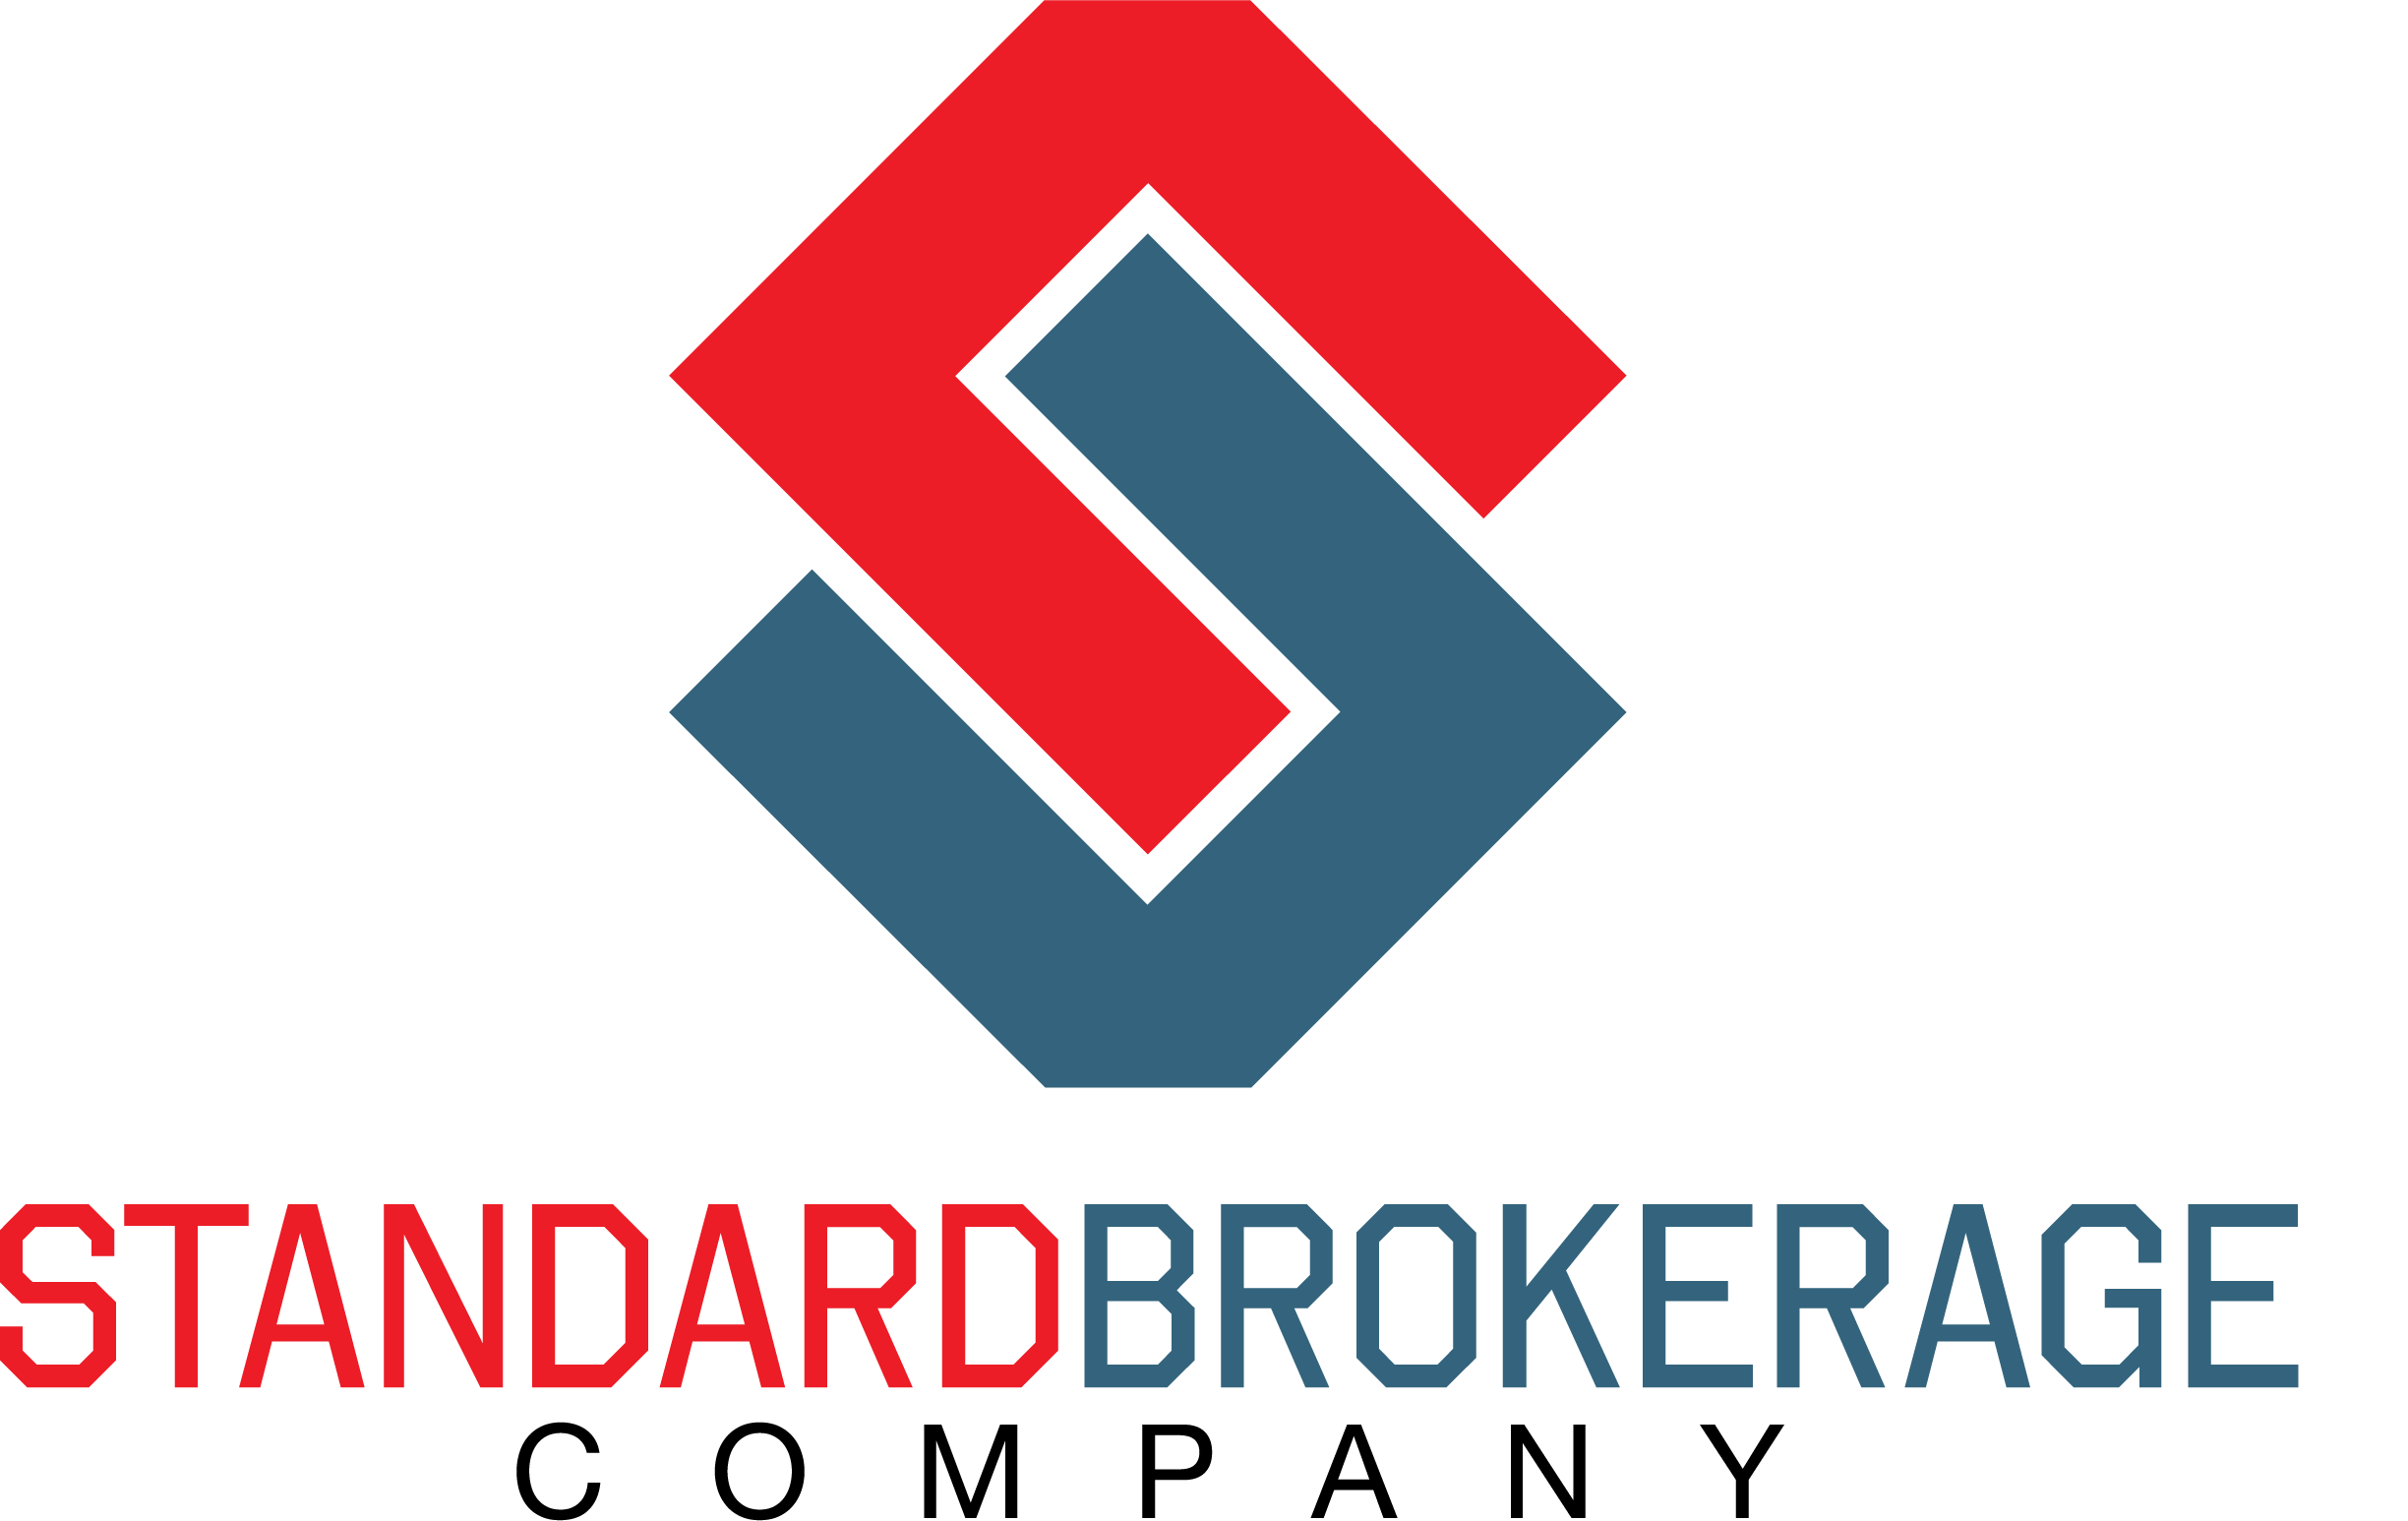 Standard Brokerage Company logo